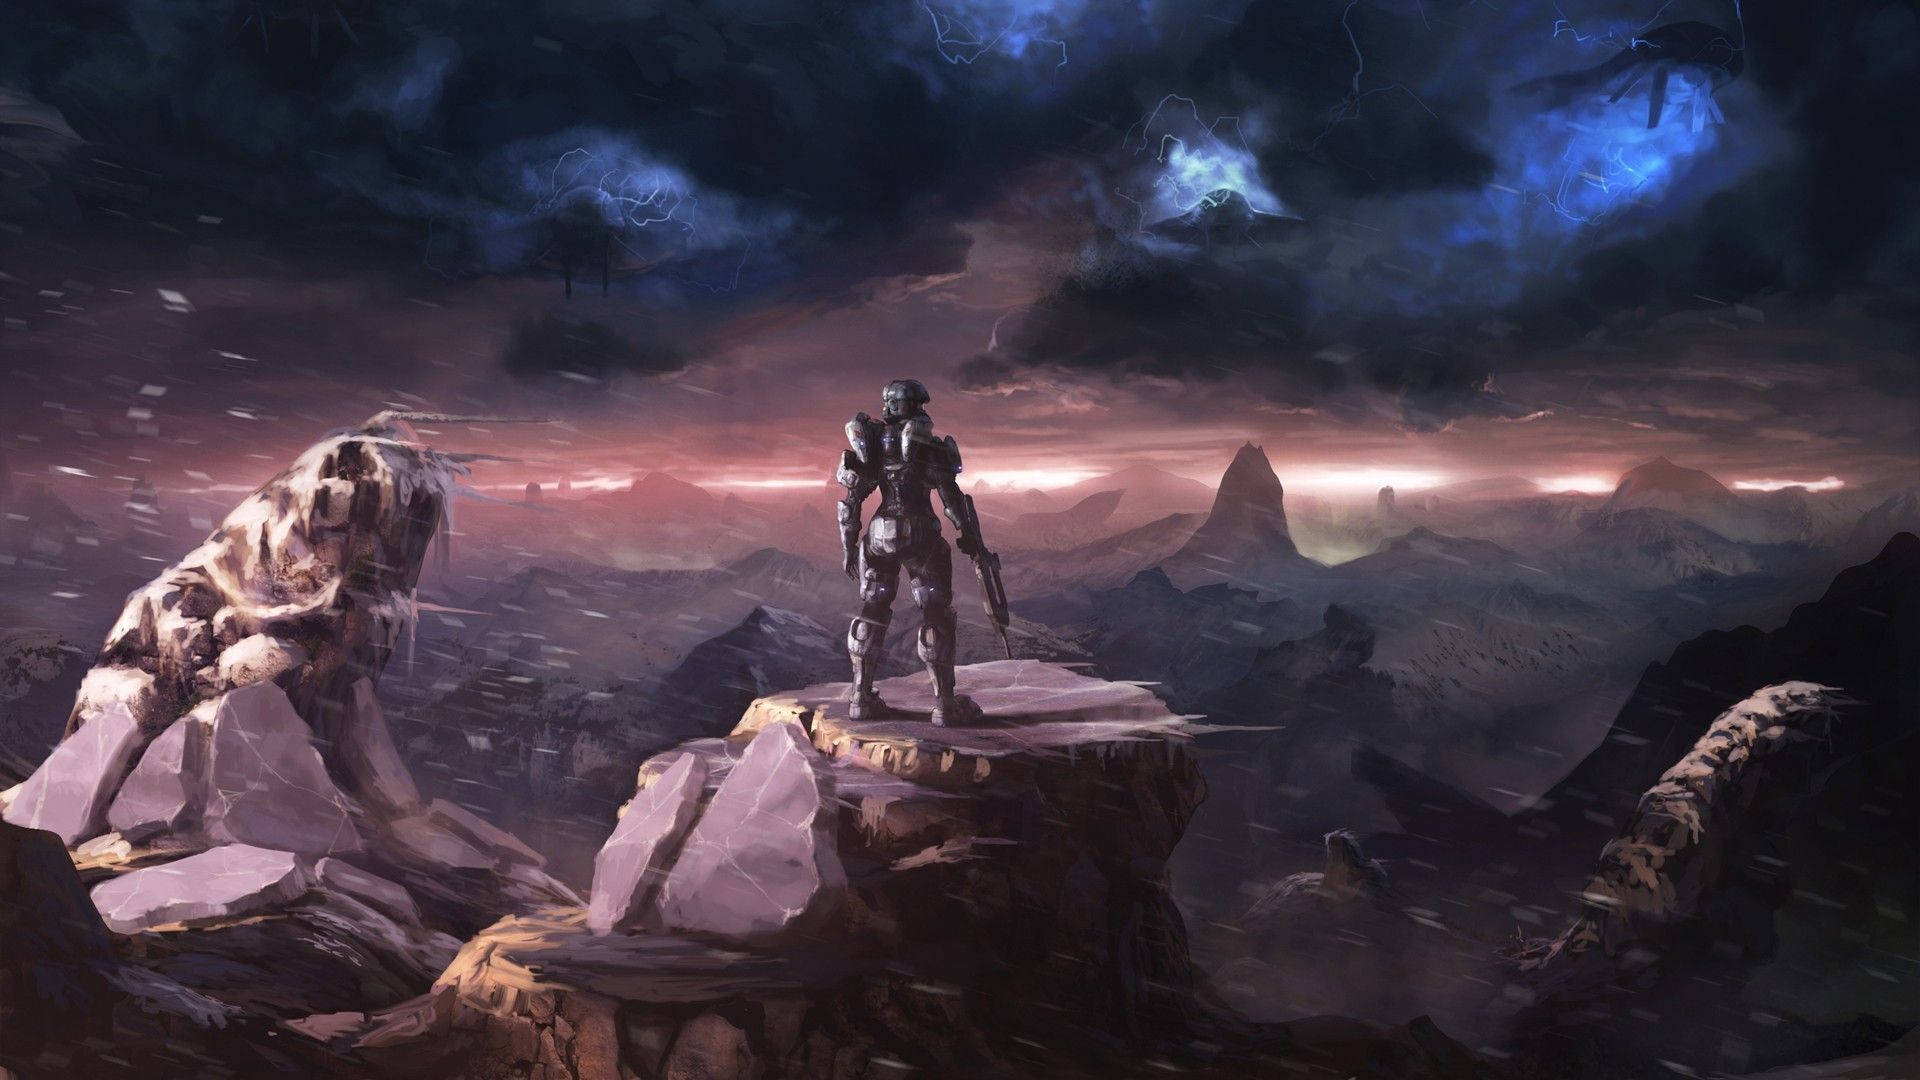 "Navigating the war-torn world of Halo." Wallpaper